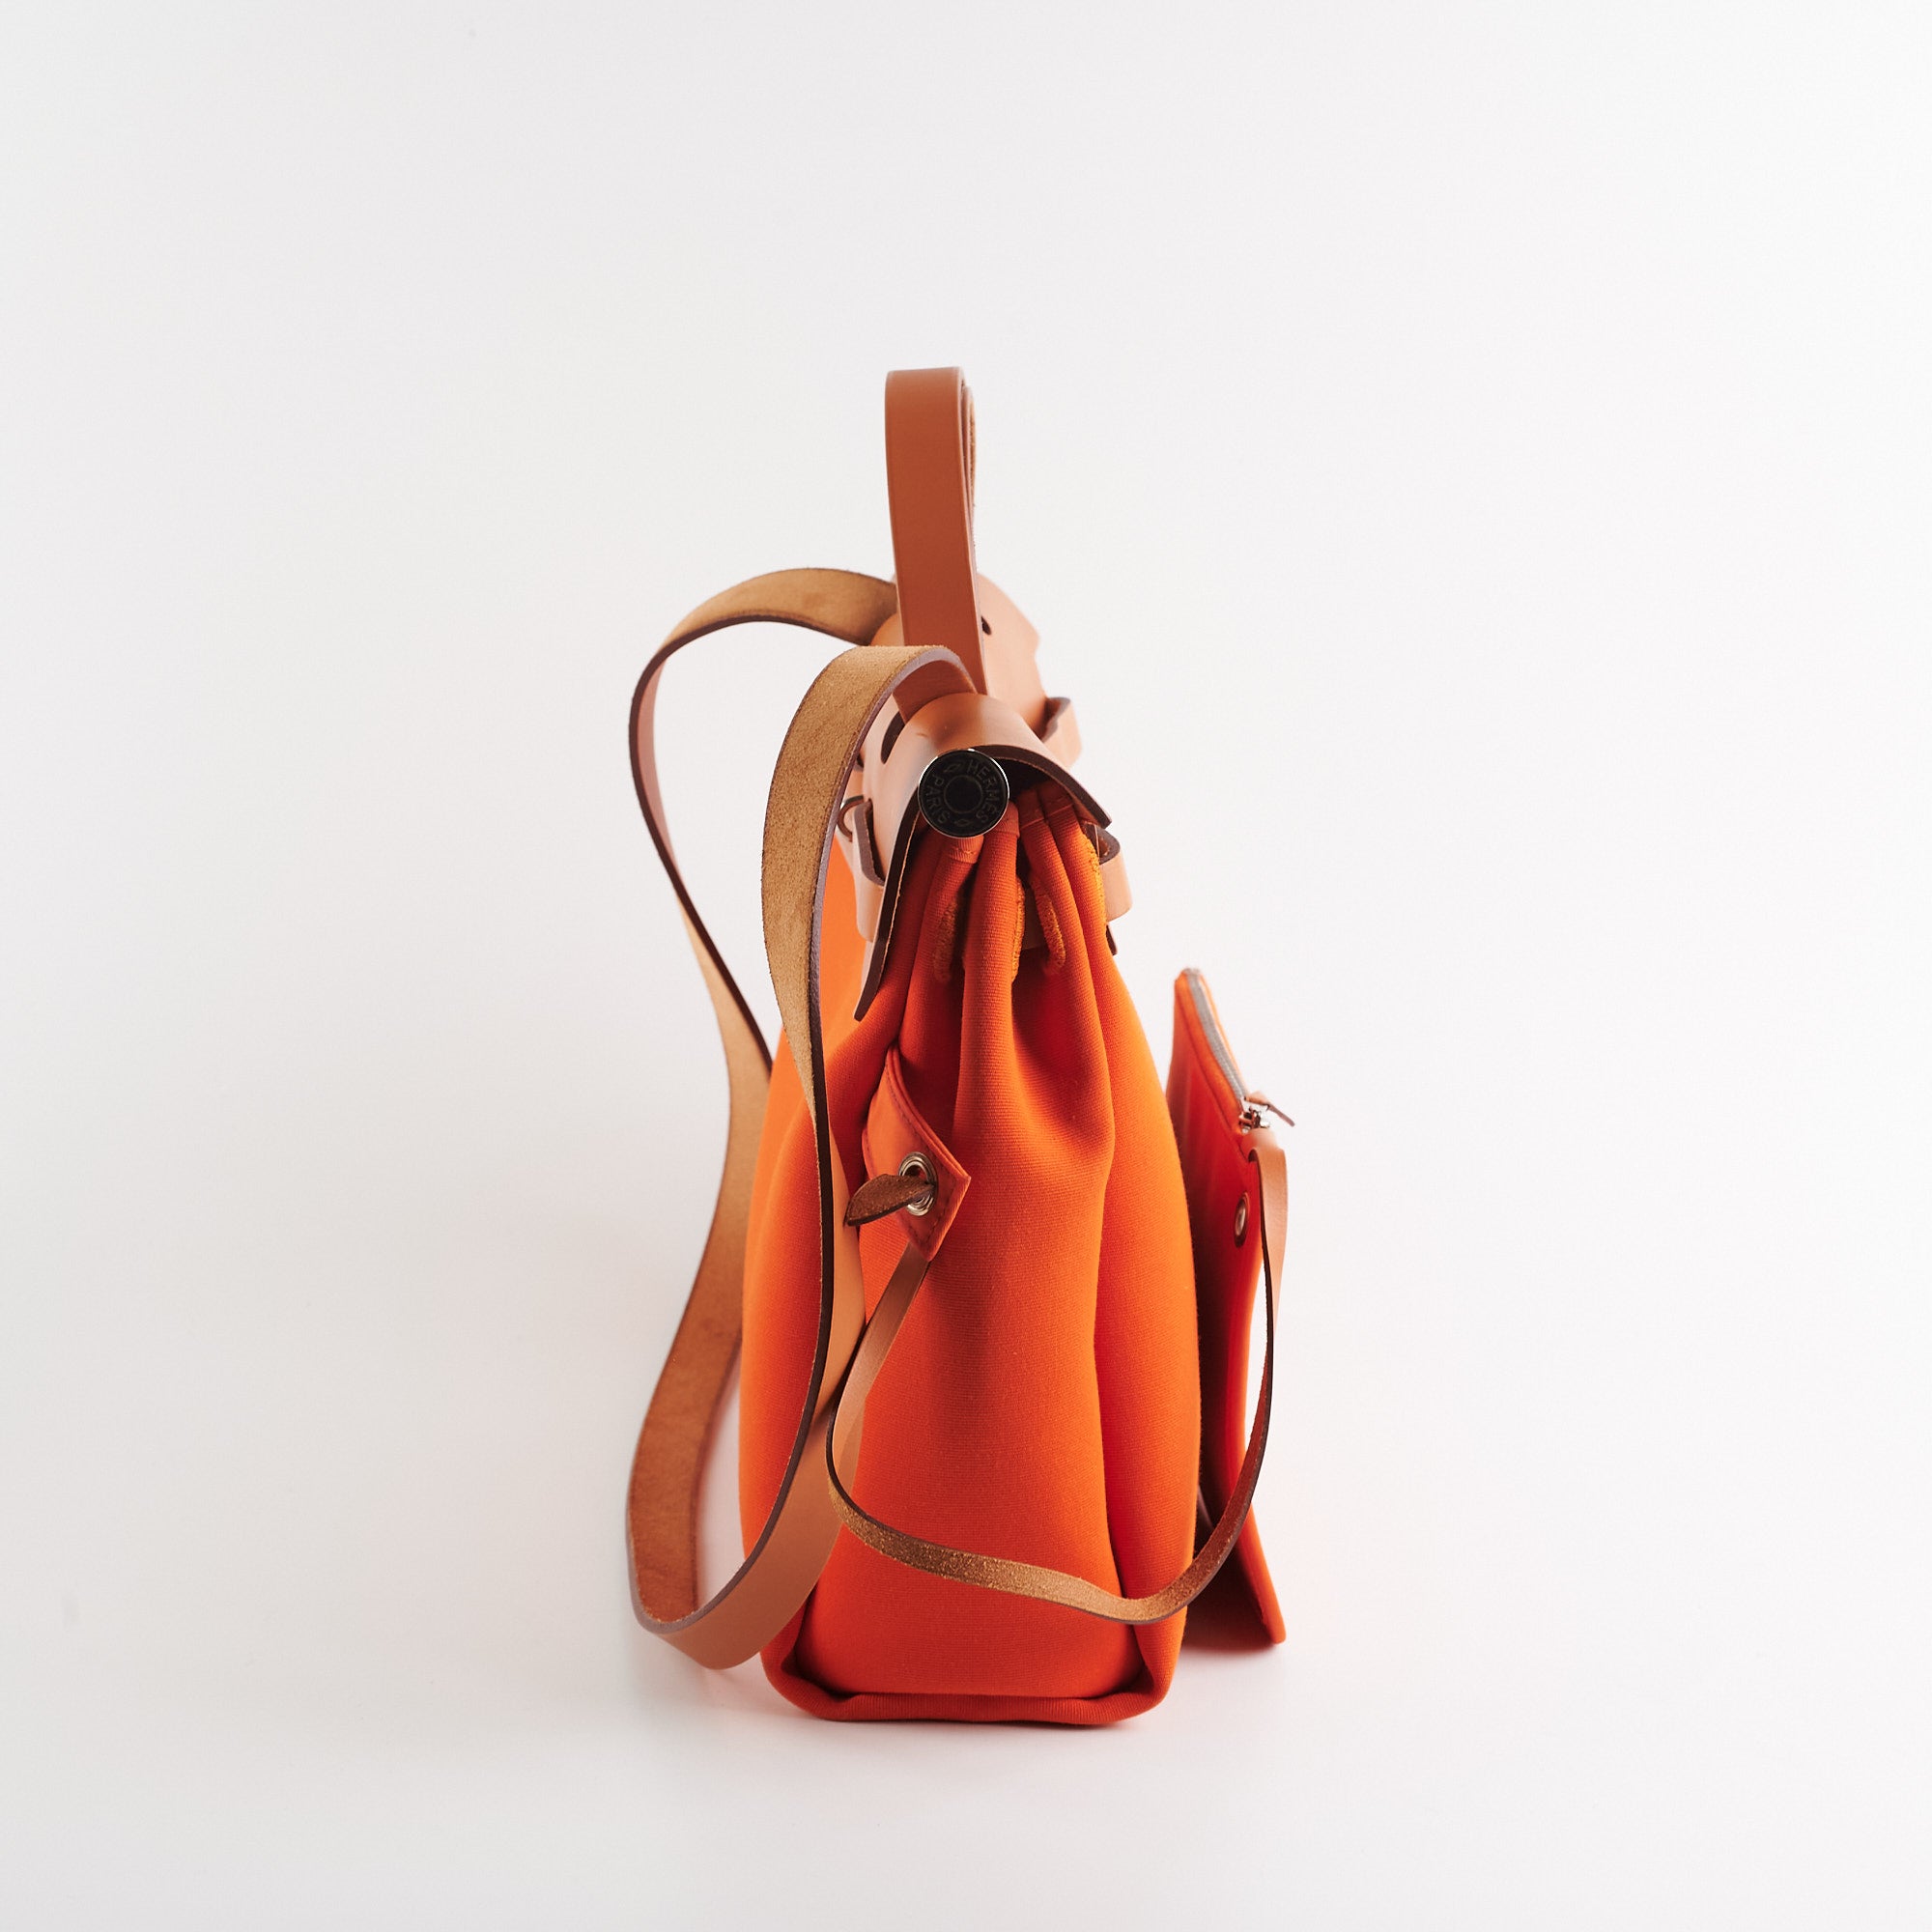 Authentic Hermes Herbag Backpack Handbag Red & Orange (item #1065088)